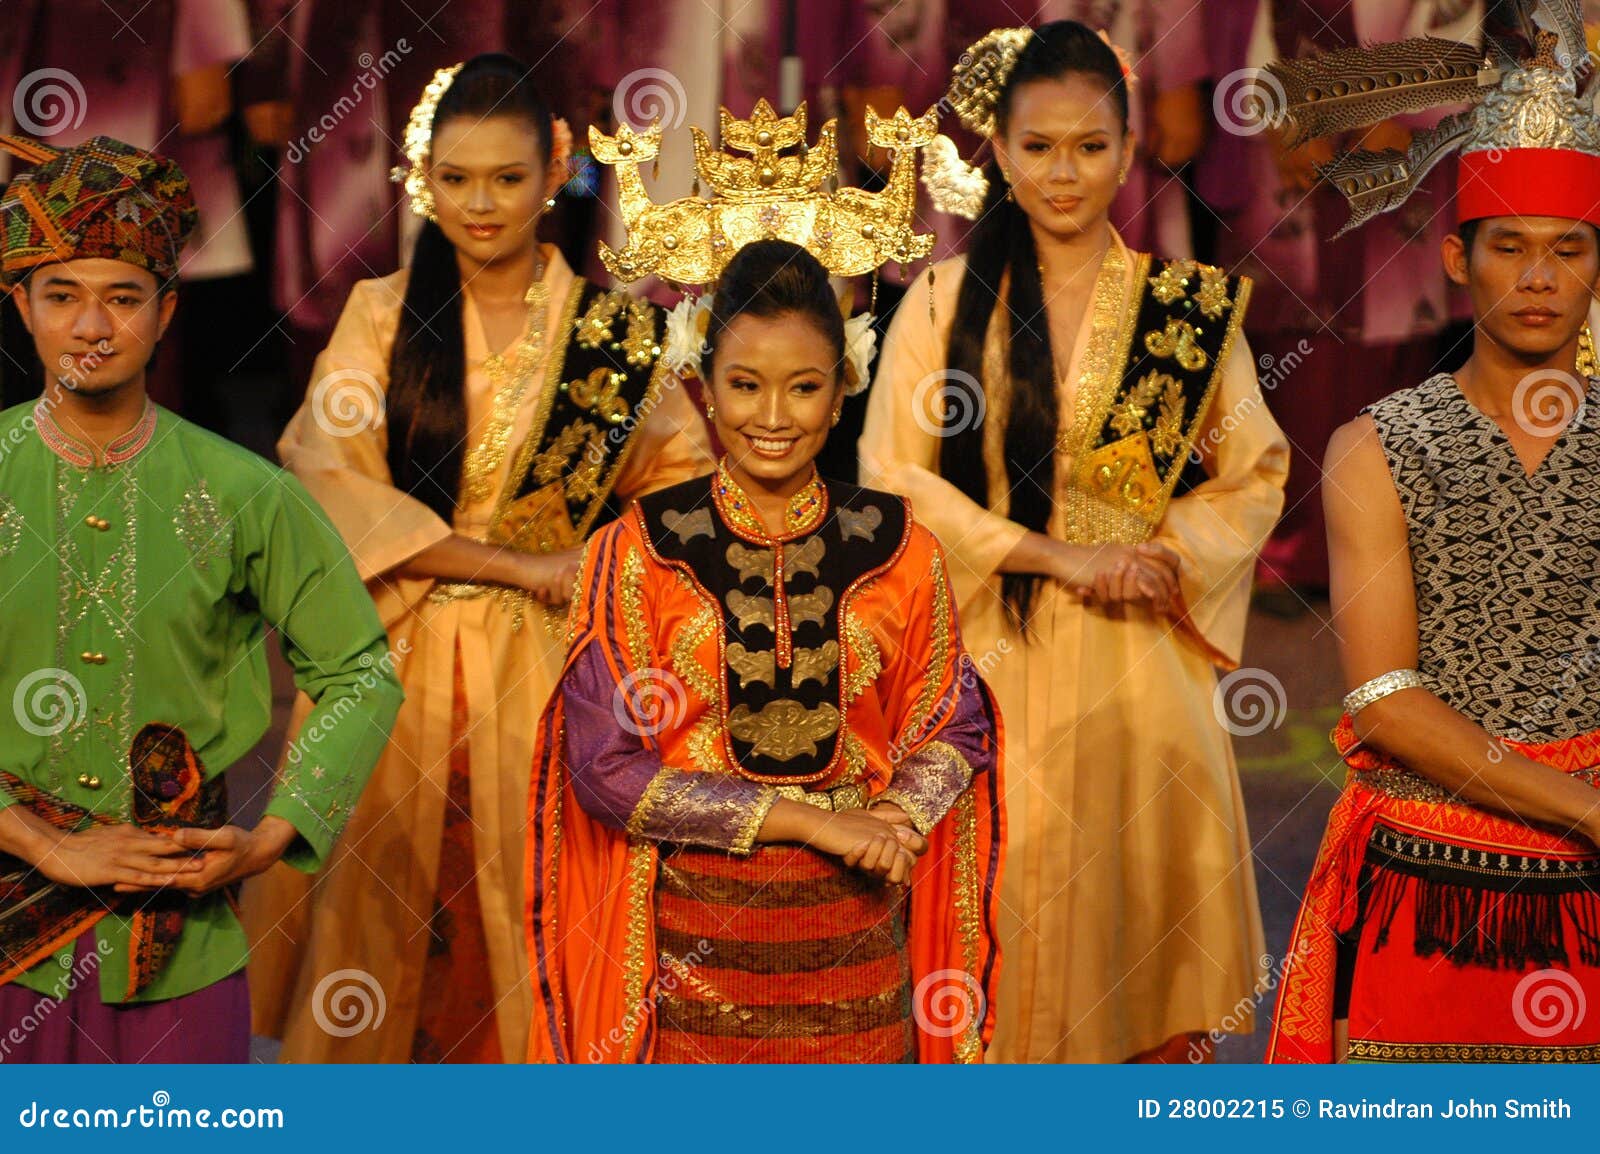 ORANG ULU | 摄于 马来西亚 我的老家古晋. 2008 年 州元首华诞庆典上 原住民多彩的传统服装 | fisheyeimages | Flickr